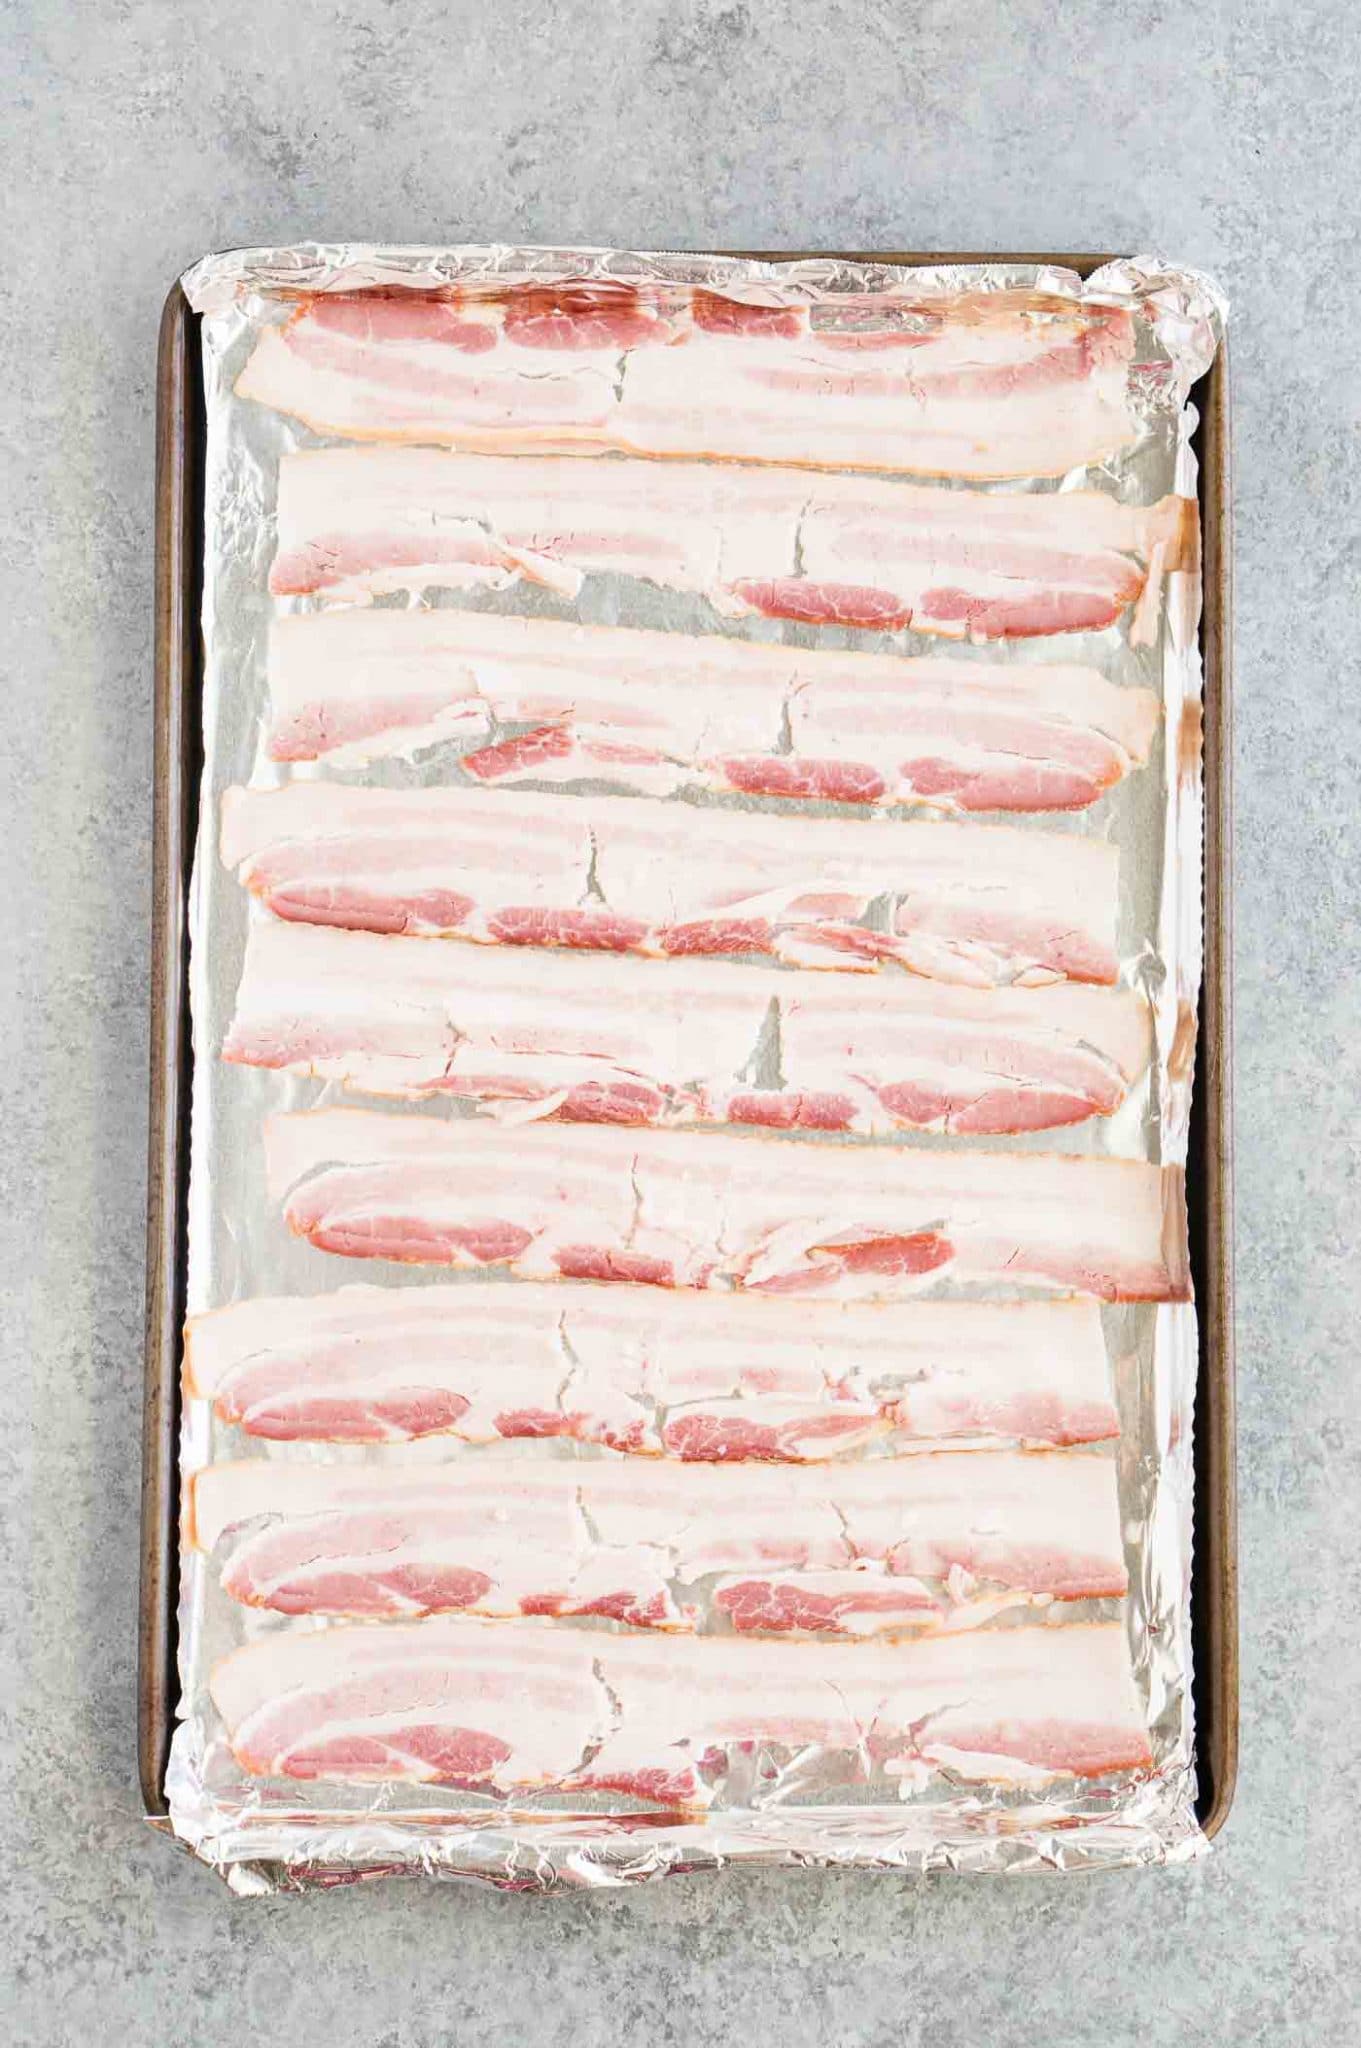 raw bacon on baking sheet